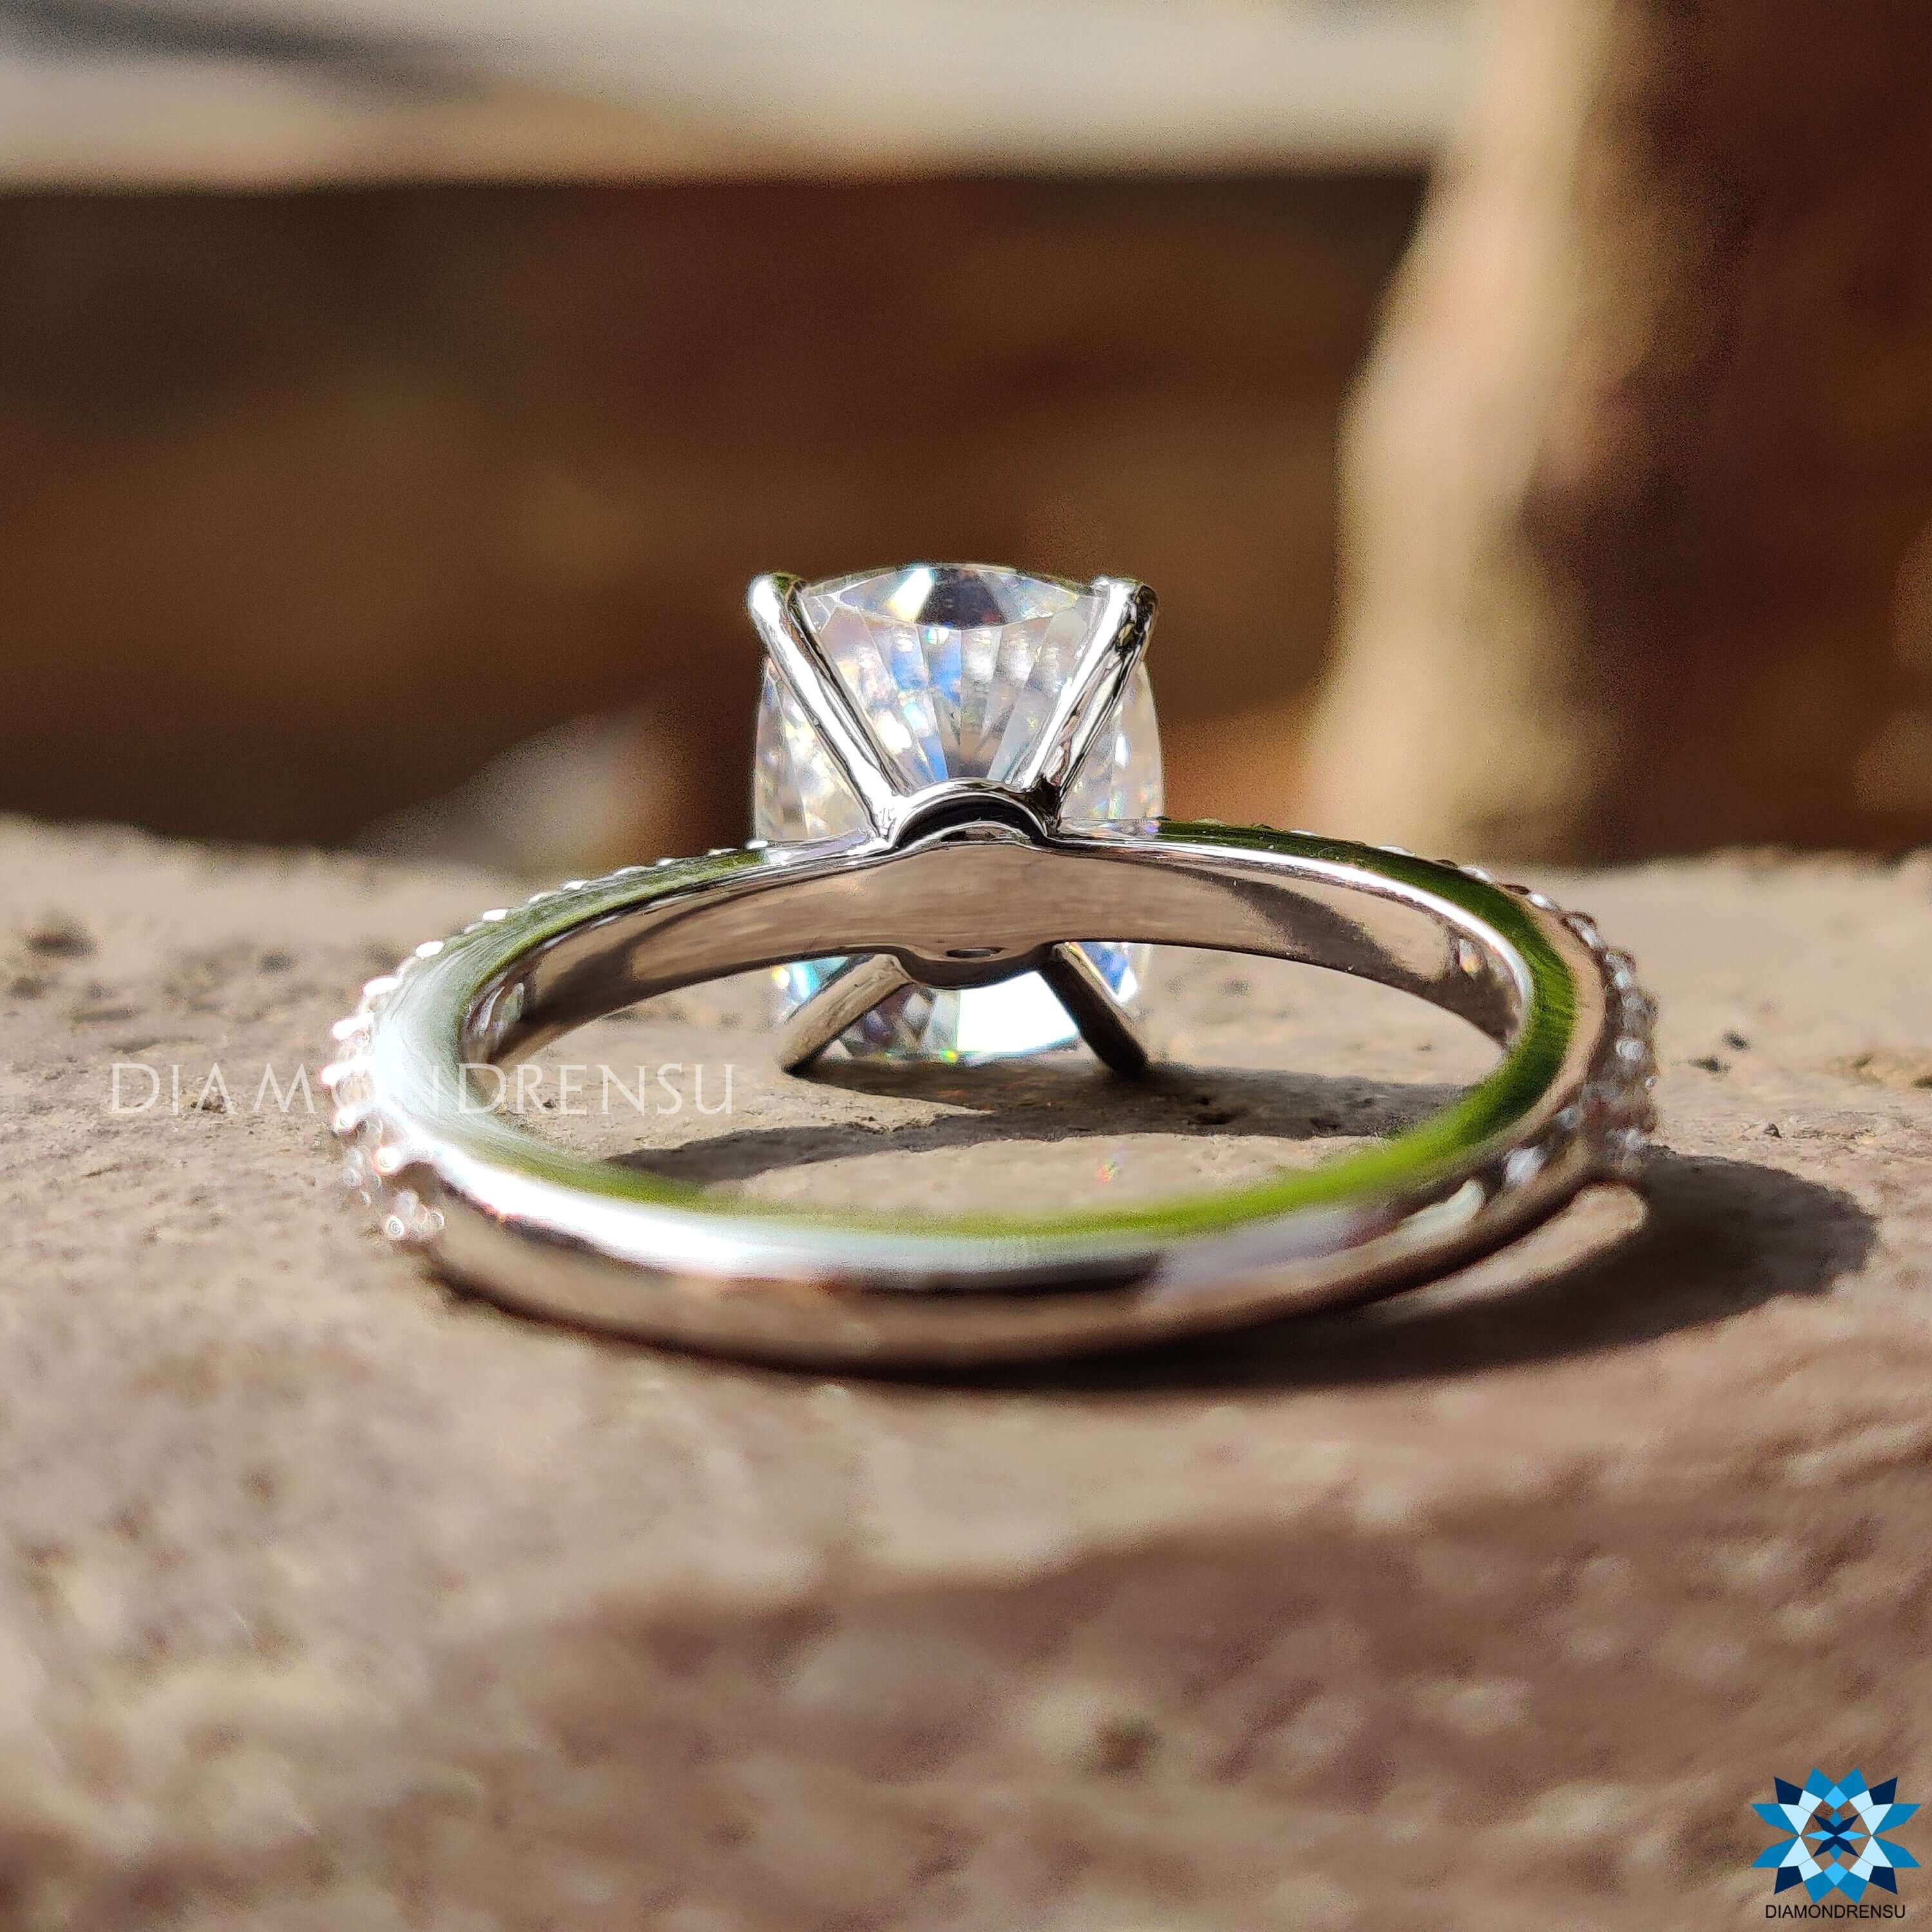 create your own engagement ring - diamondrensu\